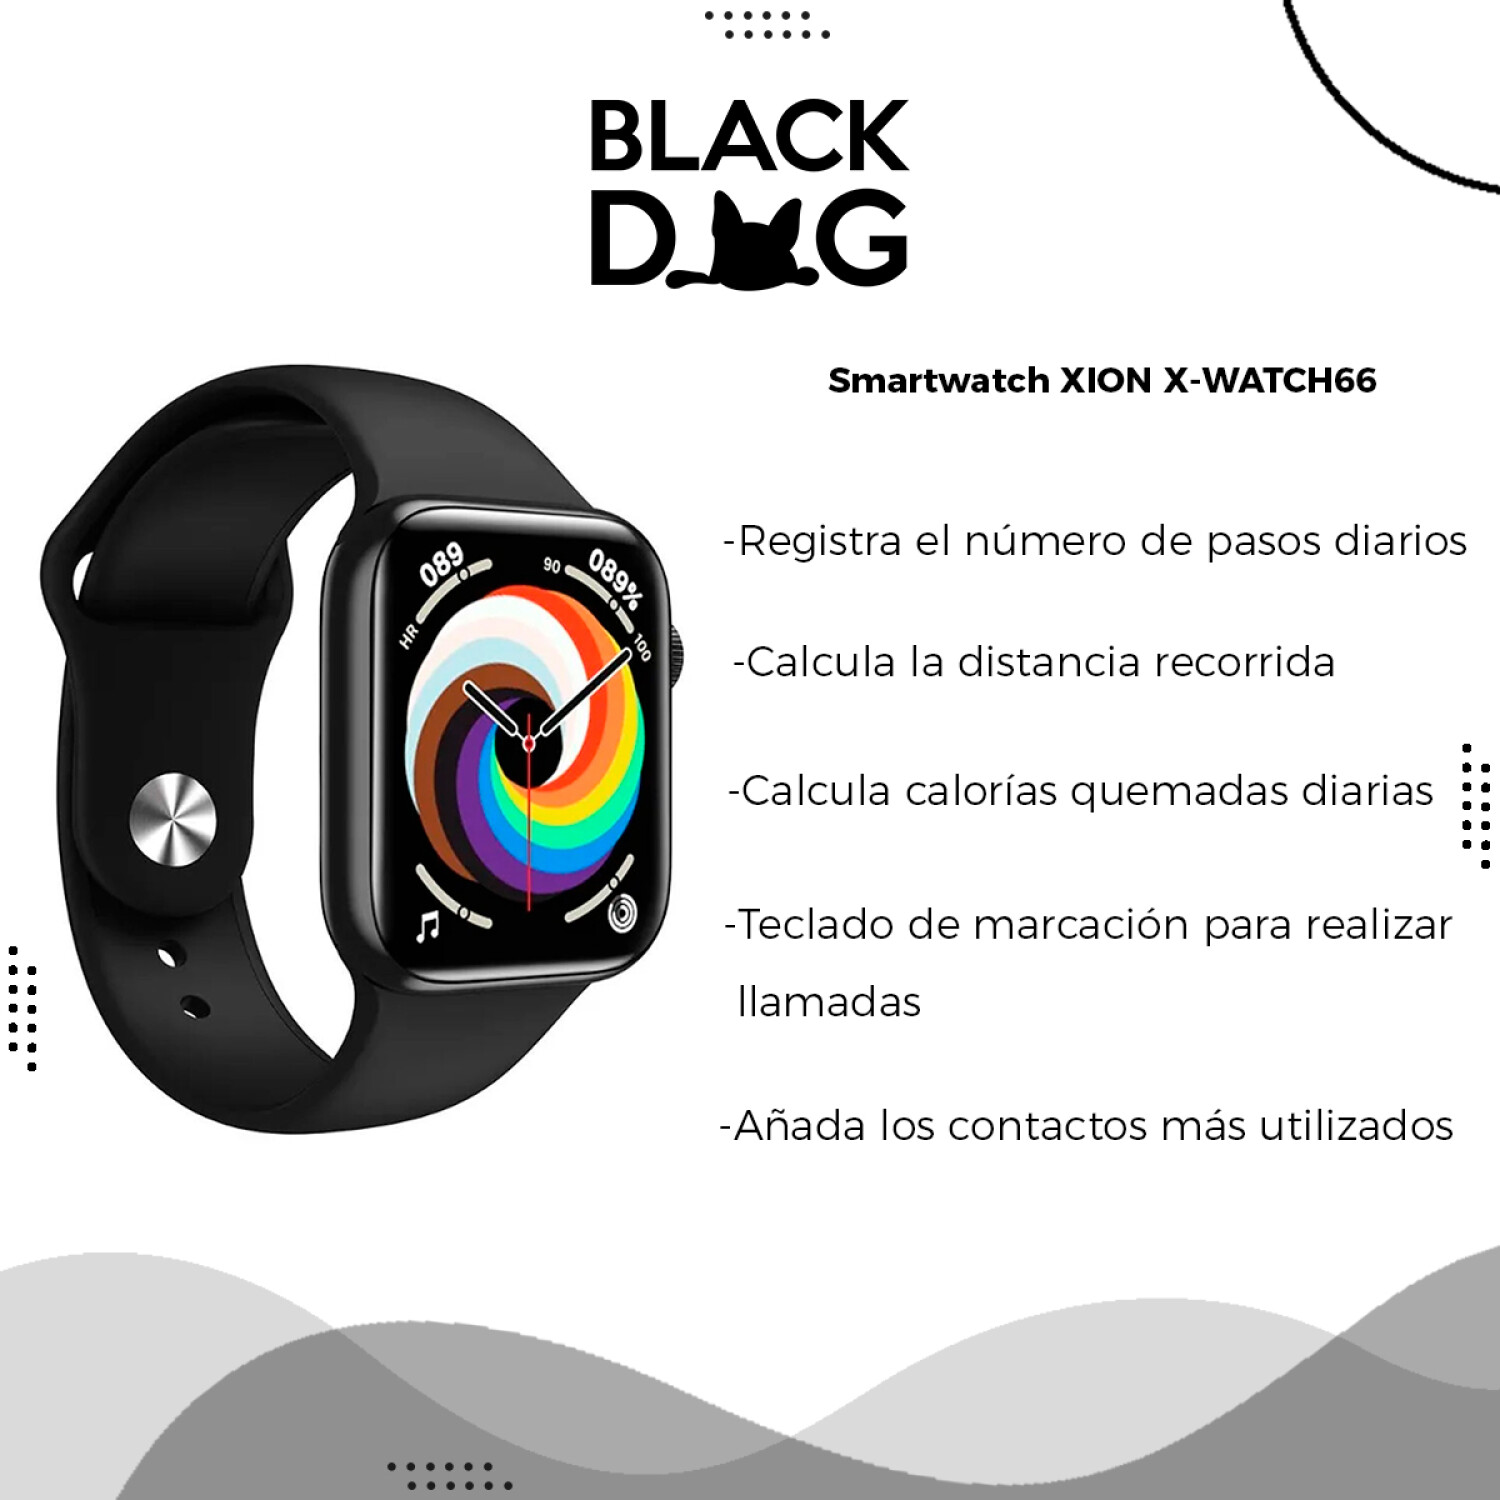 Smartwatch Xion Xi-watch66 (1,83 Pulgadas) + Reloj - Negro